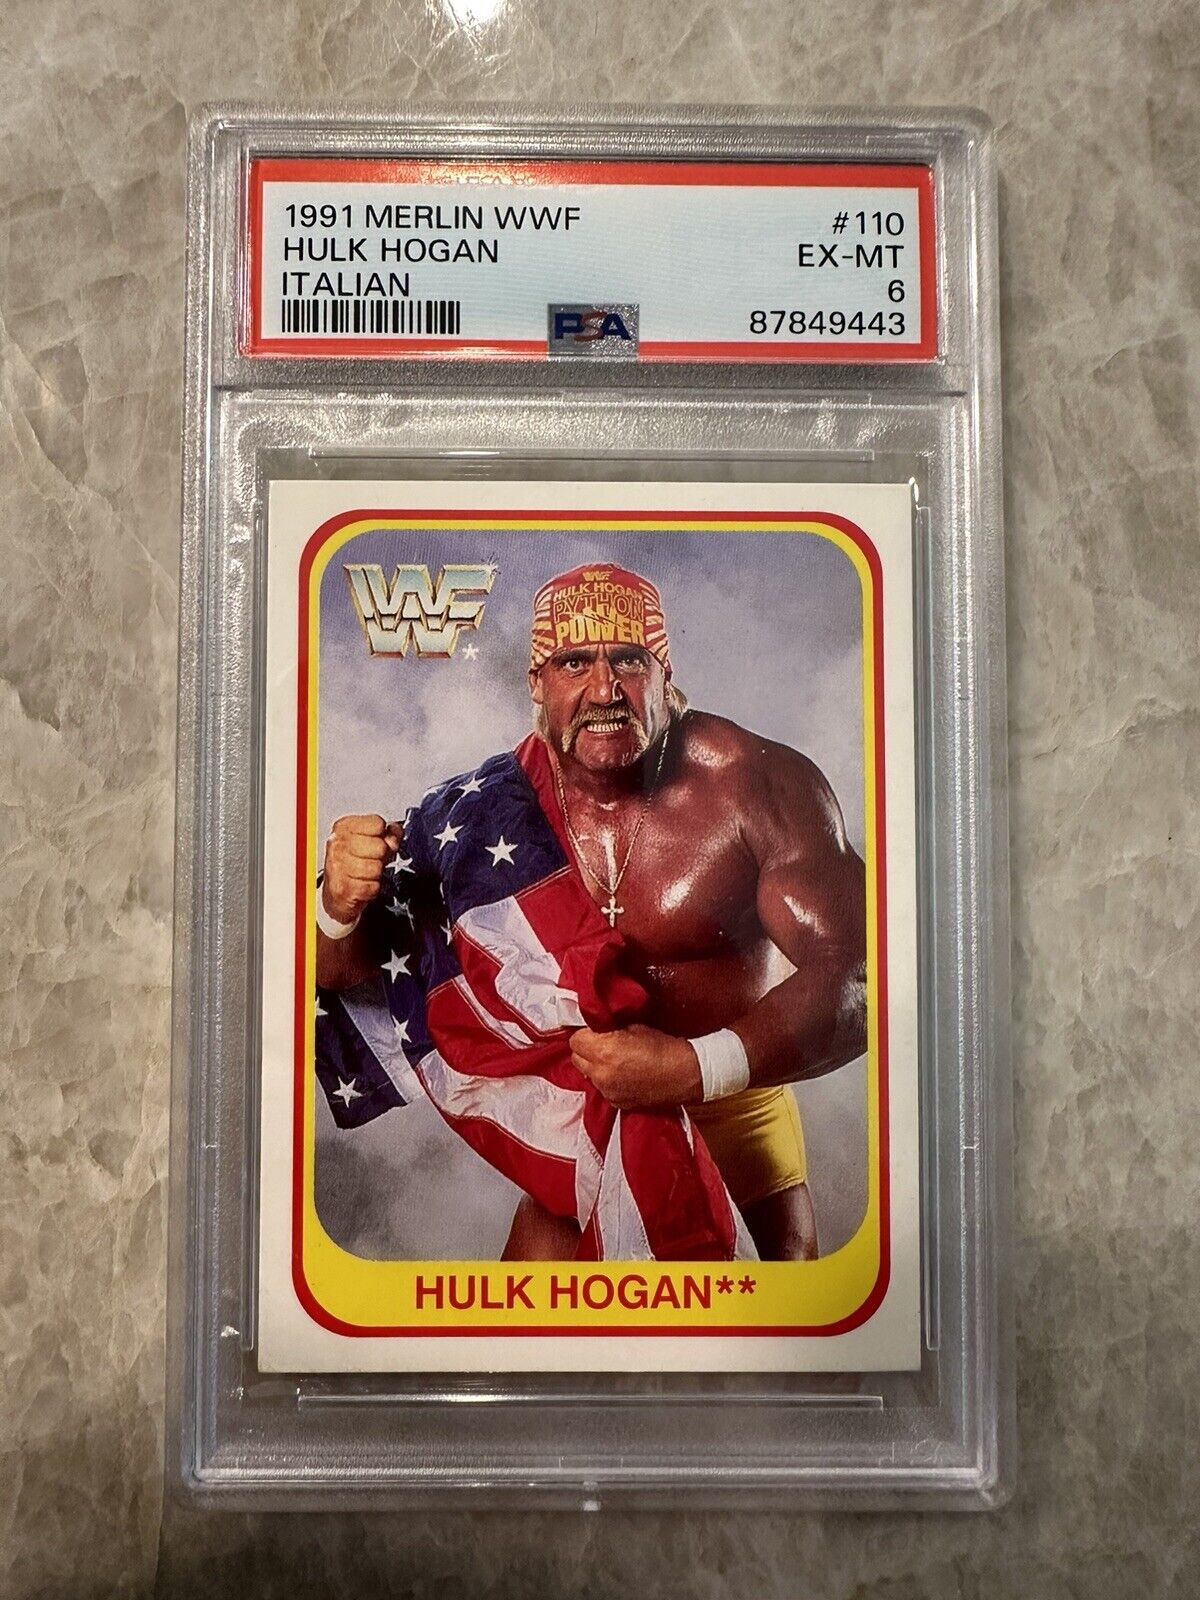 1991 Merlin Trading Card Wrestling WWF Hulk Hogan Italian 110/150 PSA 6 EX #110